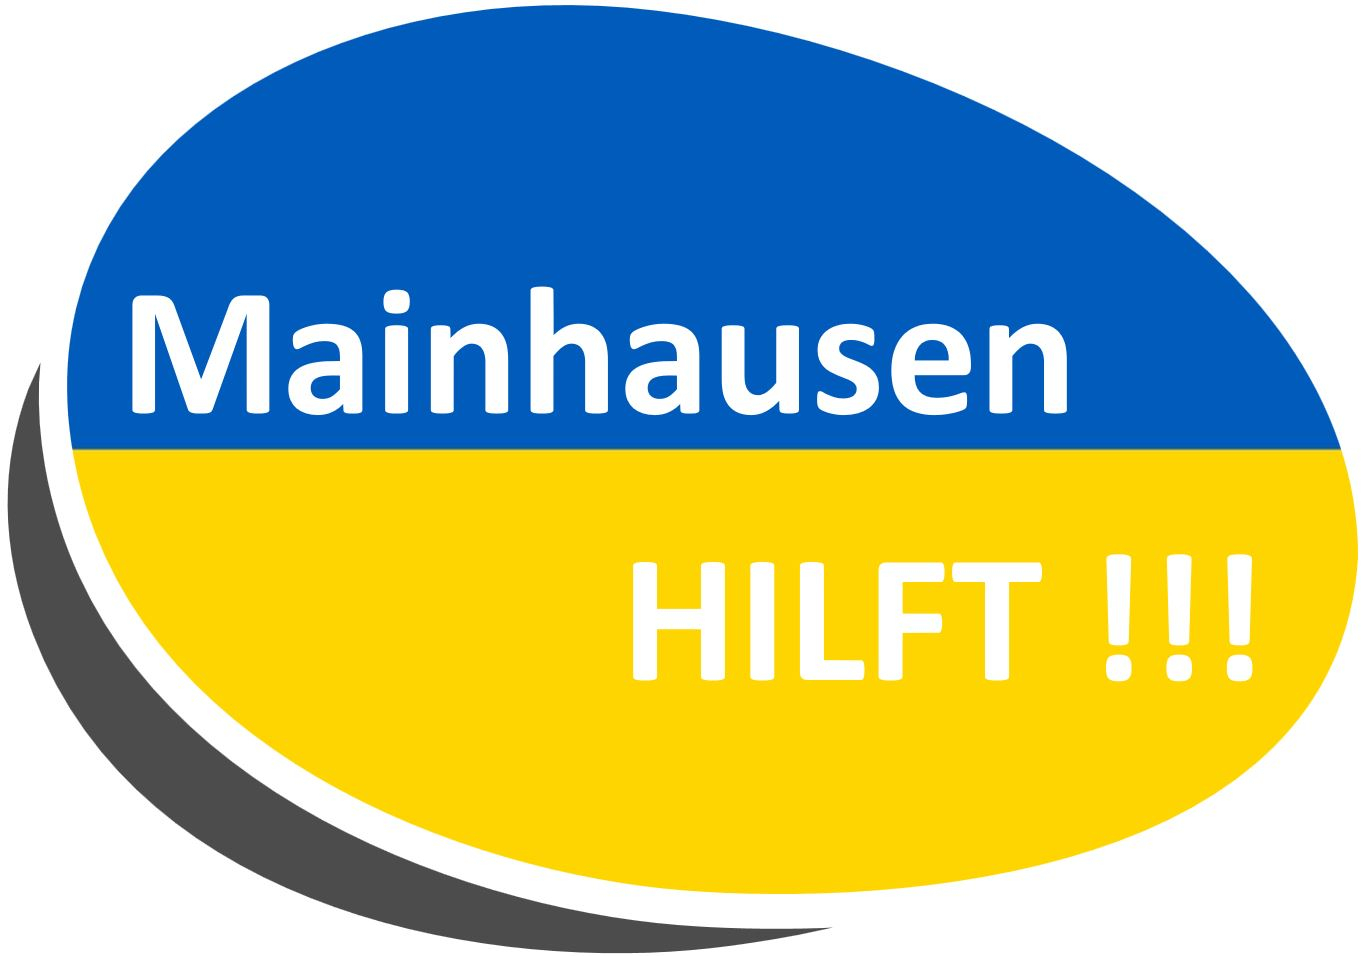 Mainhausen_Hilft